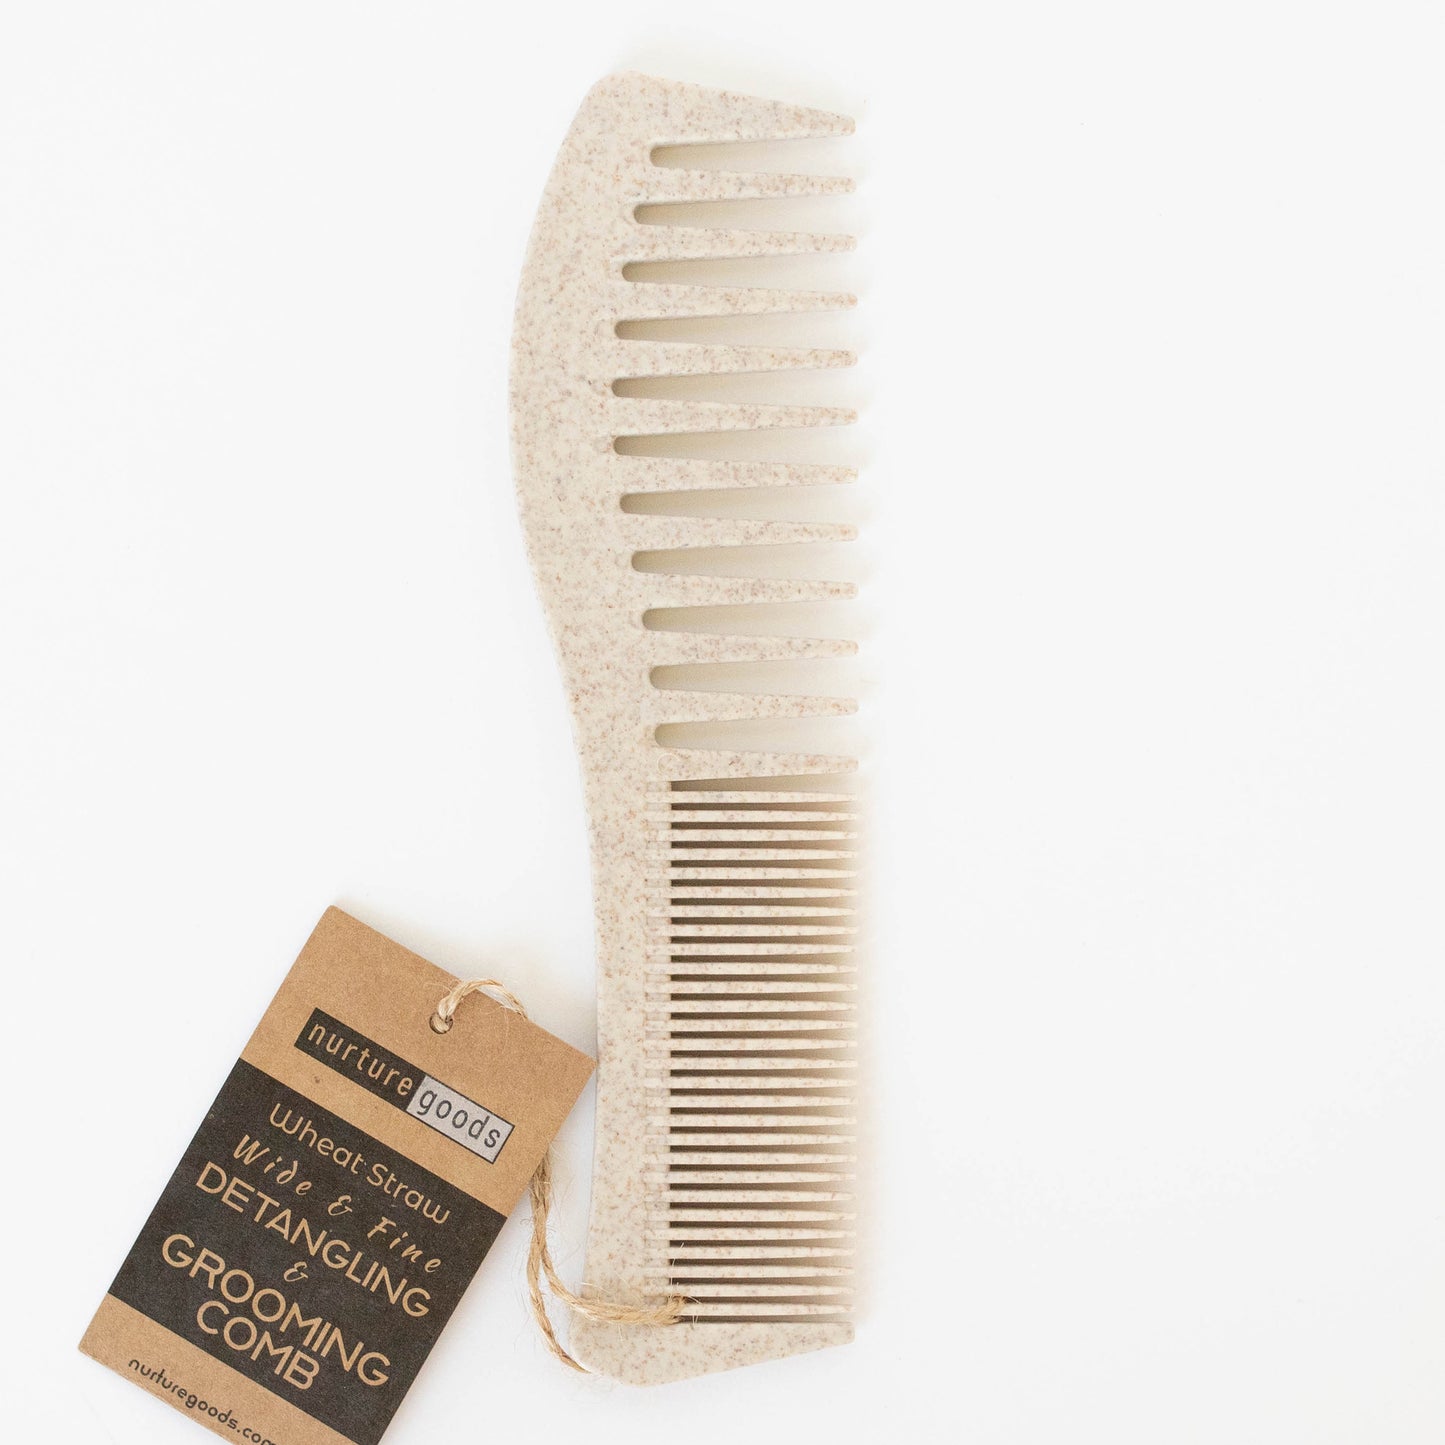 Wheat Straw Detangling & Grooming Comb